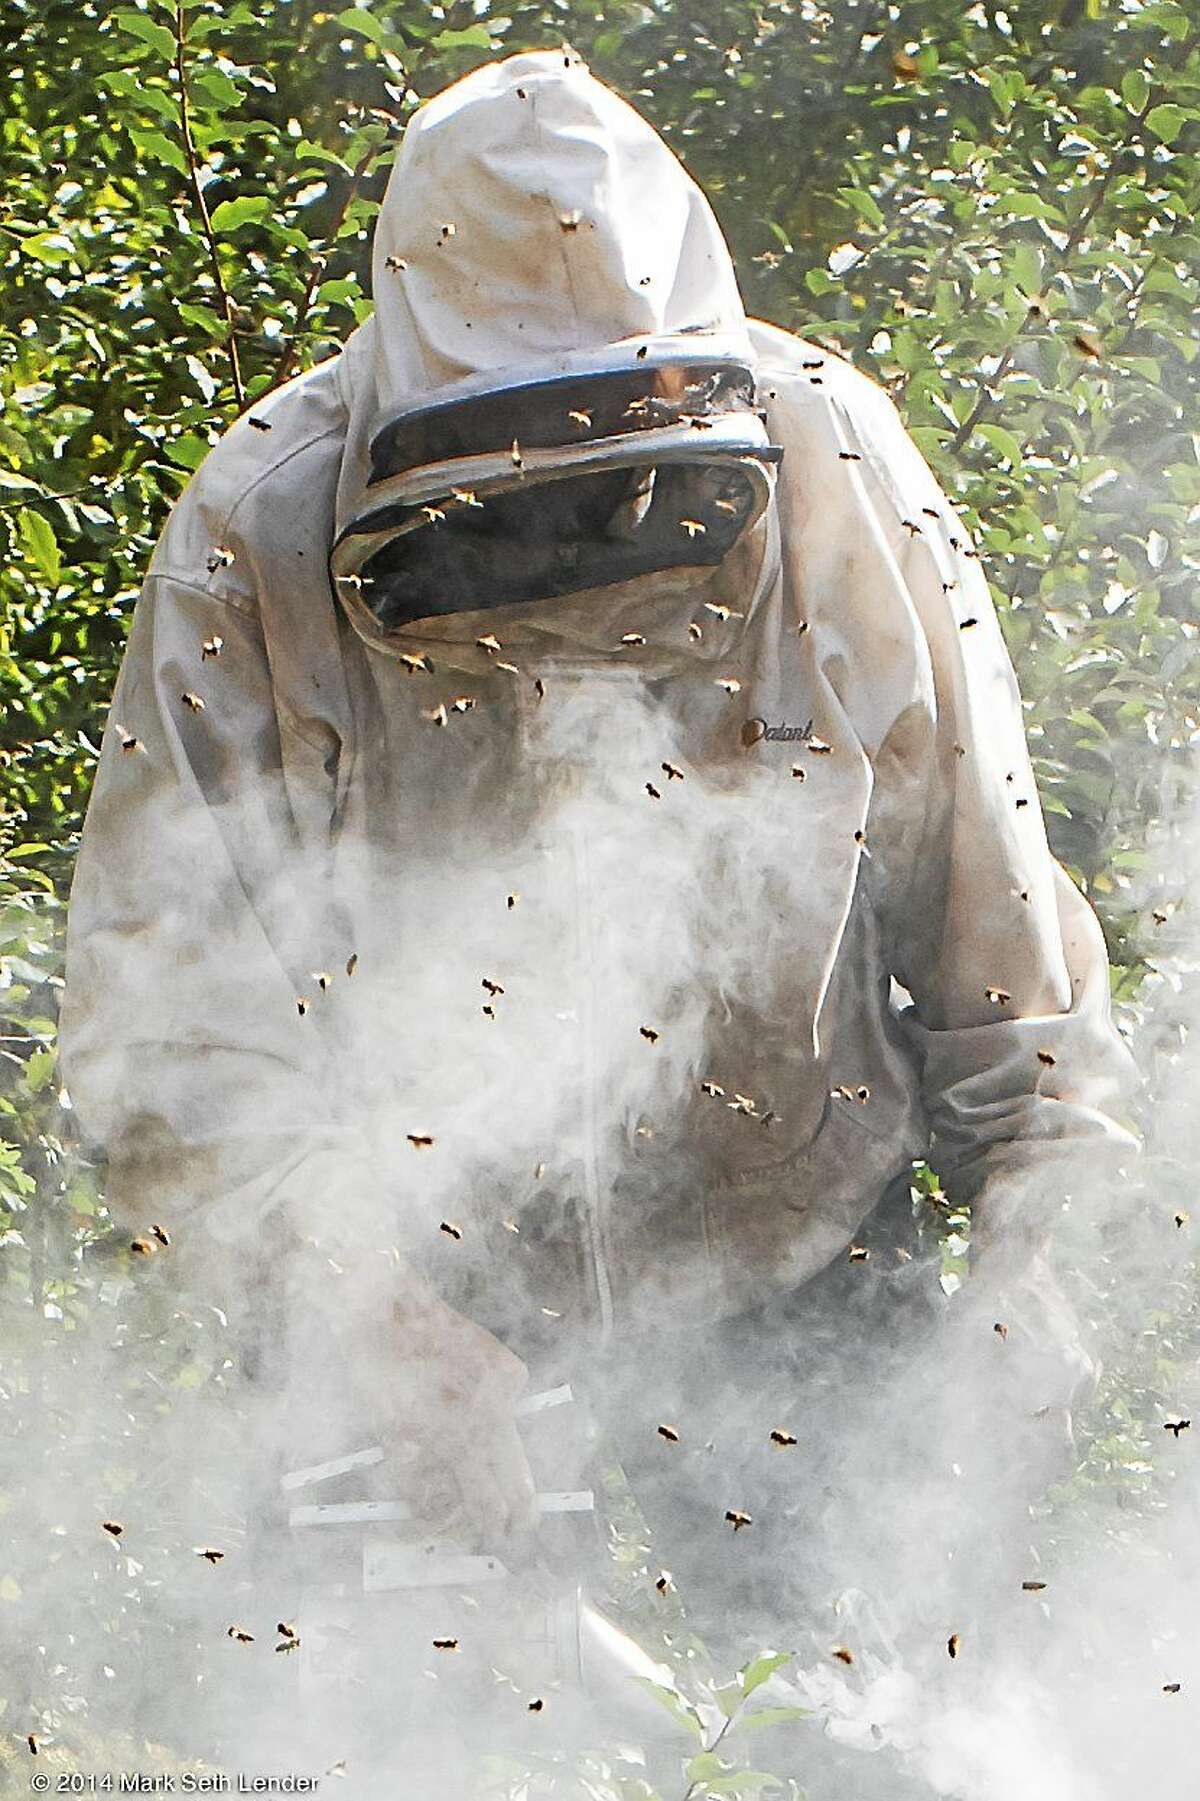 Jim Clinton calming an angry hive with smoke.